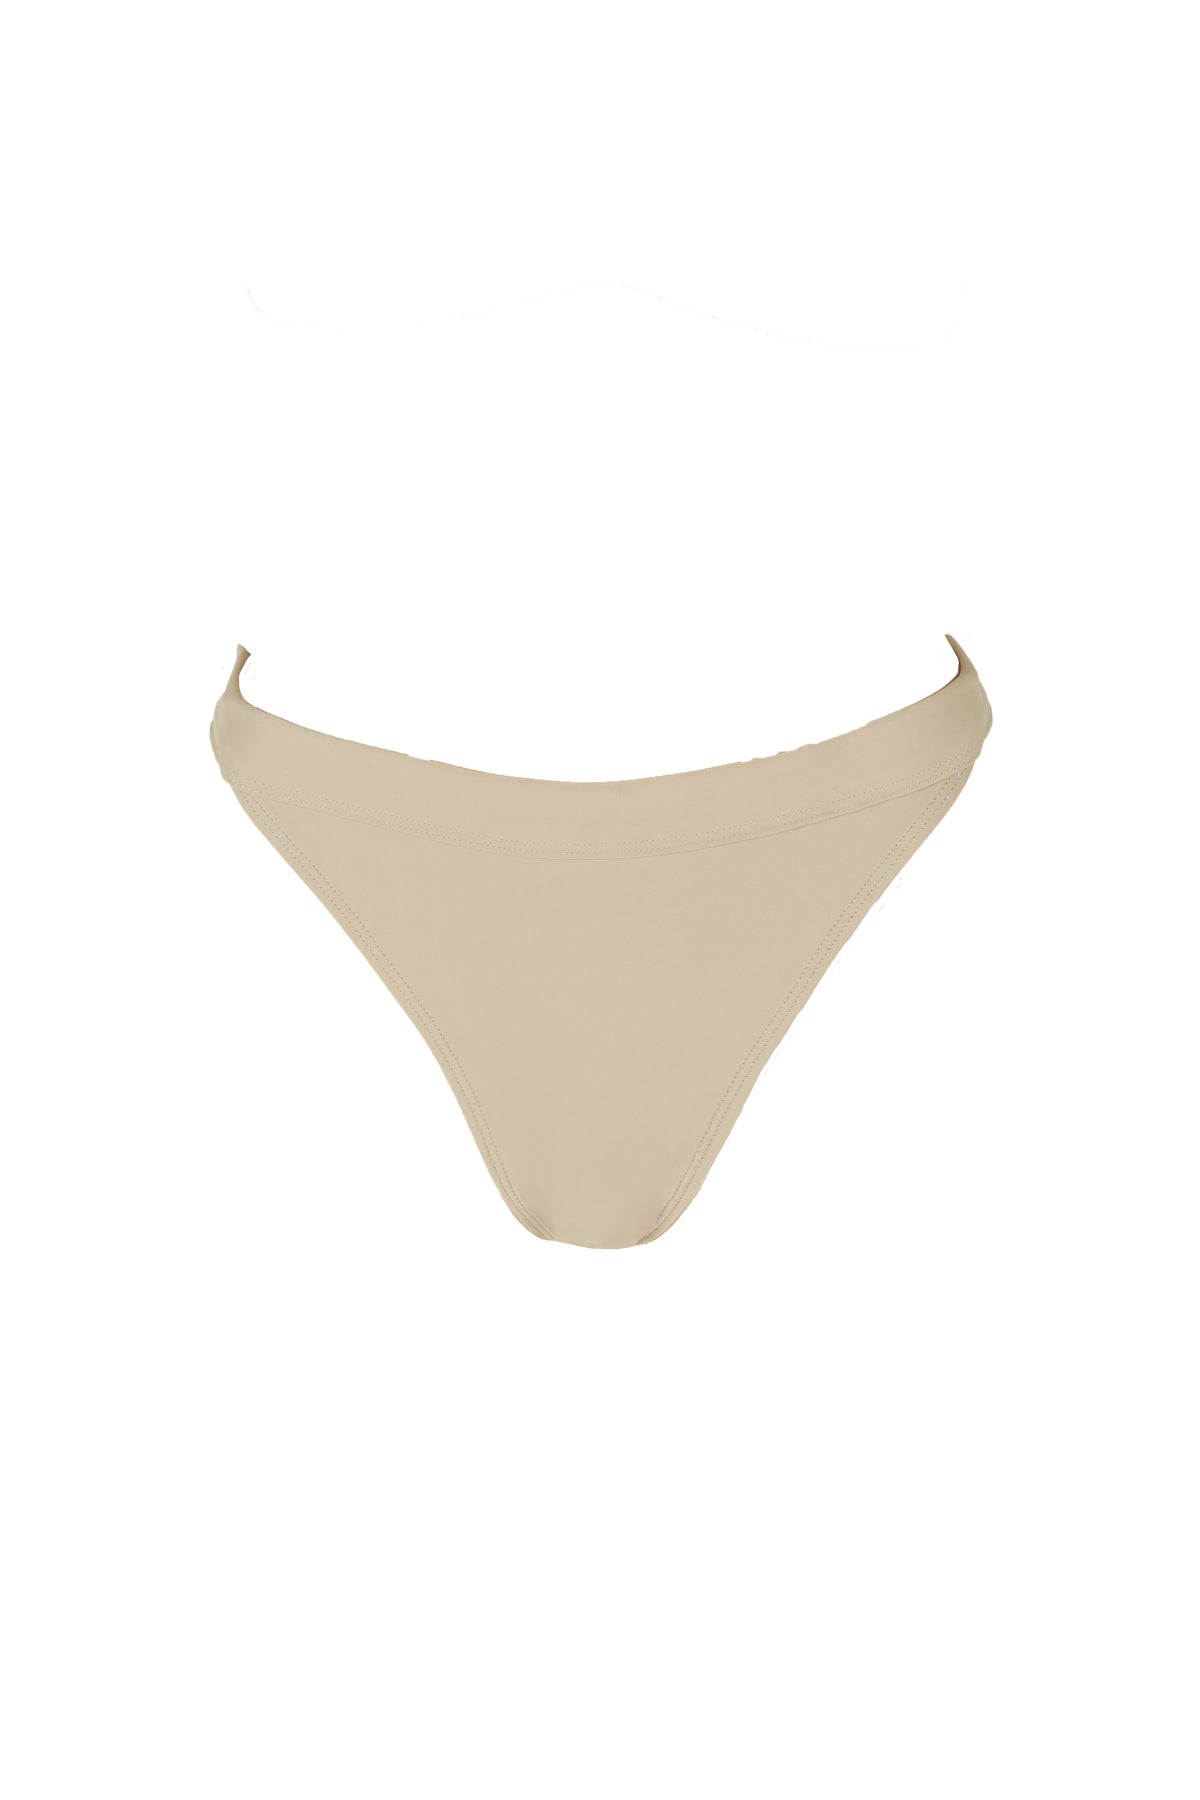 Hedy mid rise bikini bottoms in beige from luxury sustainable swimwear brand Koraru